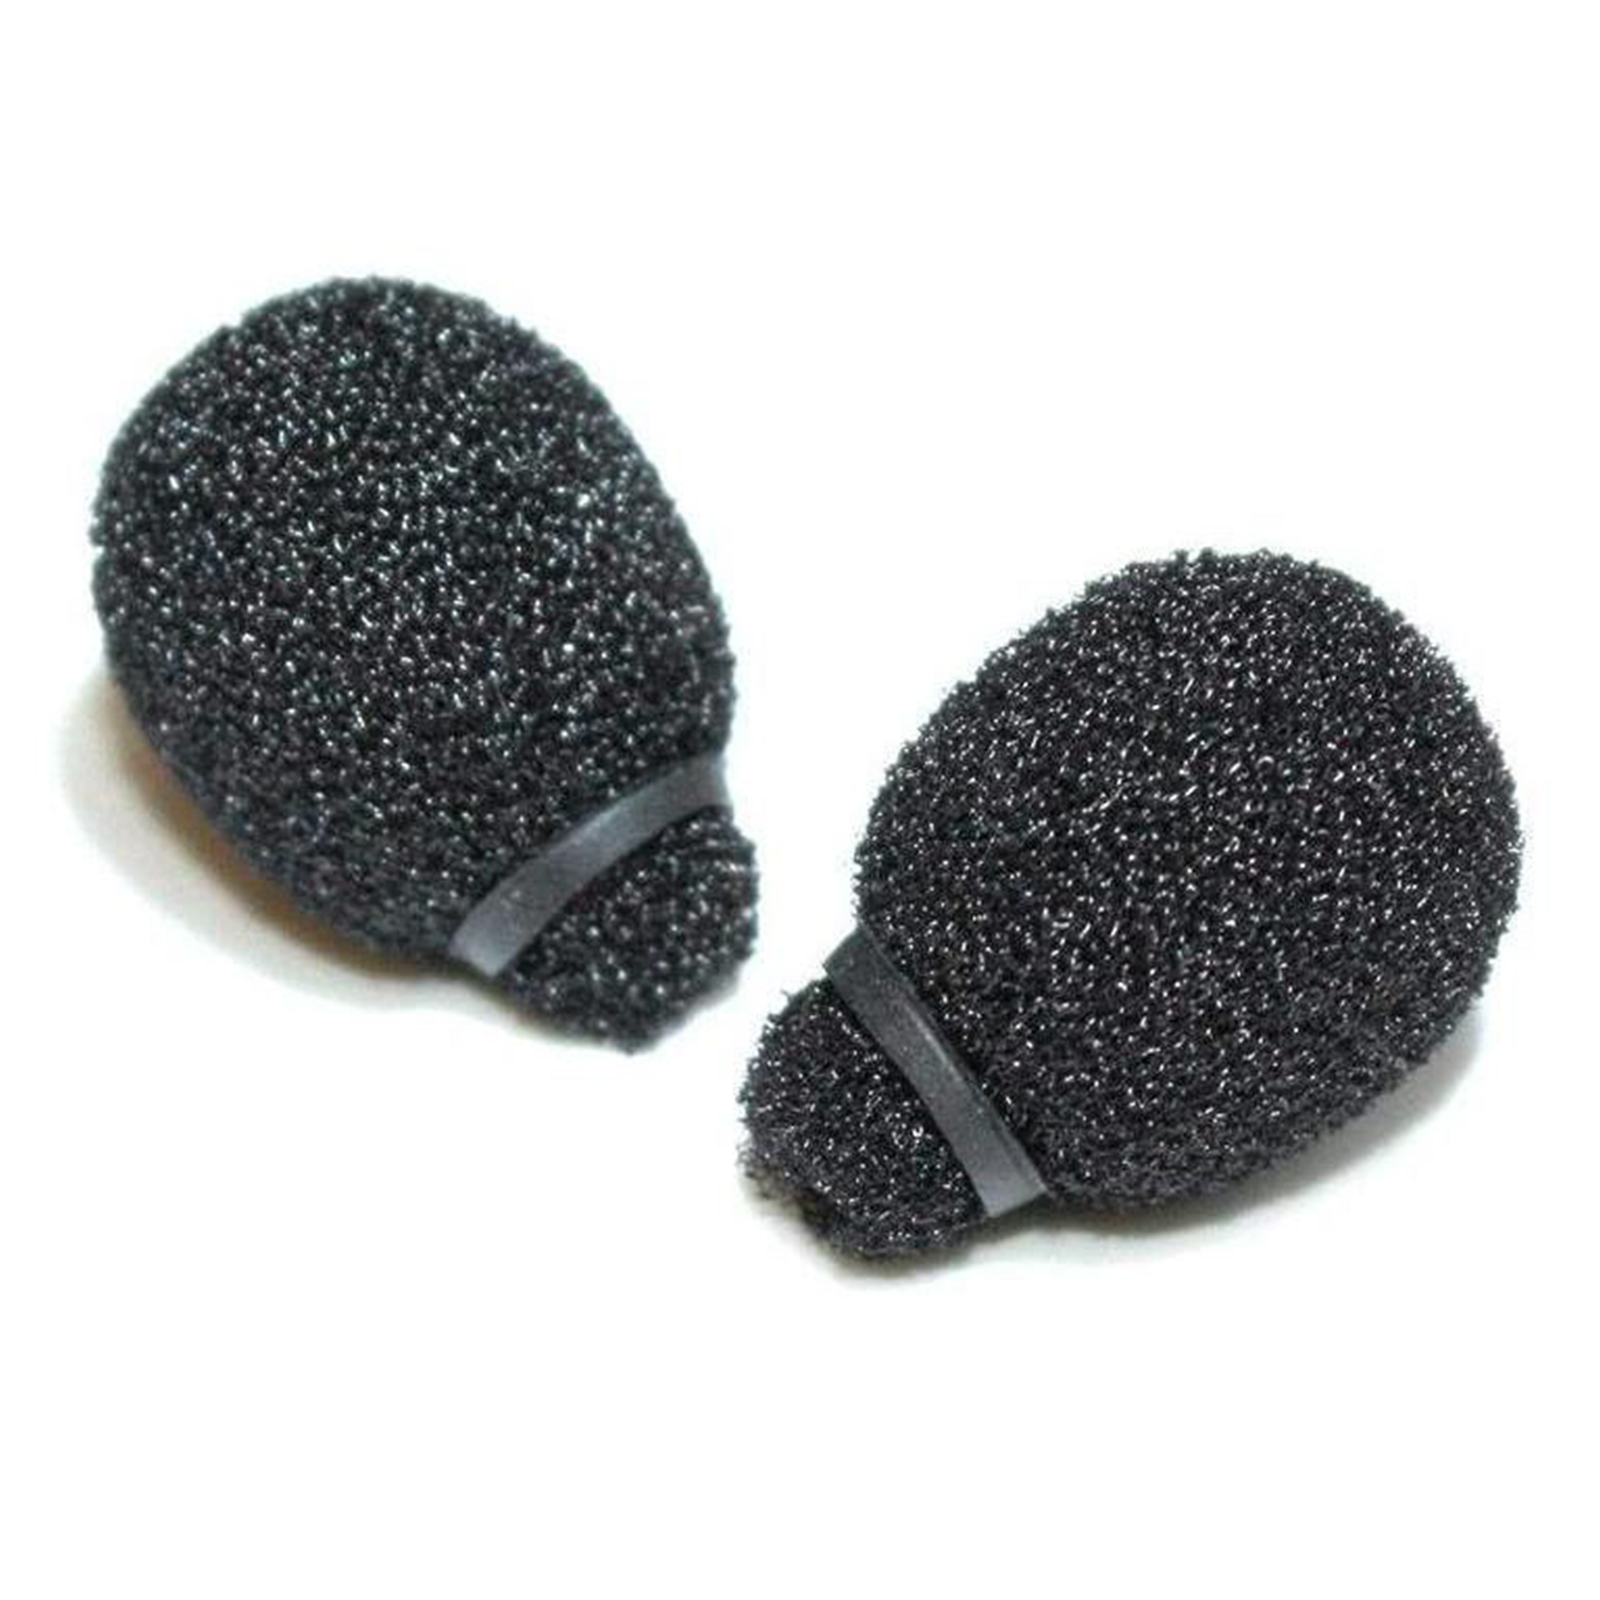 Image of Rycote Miniature Lavalier Foams Black 1 pack of 2